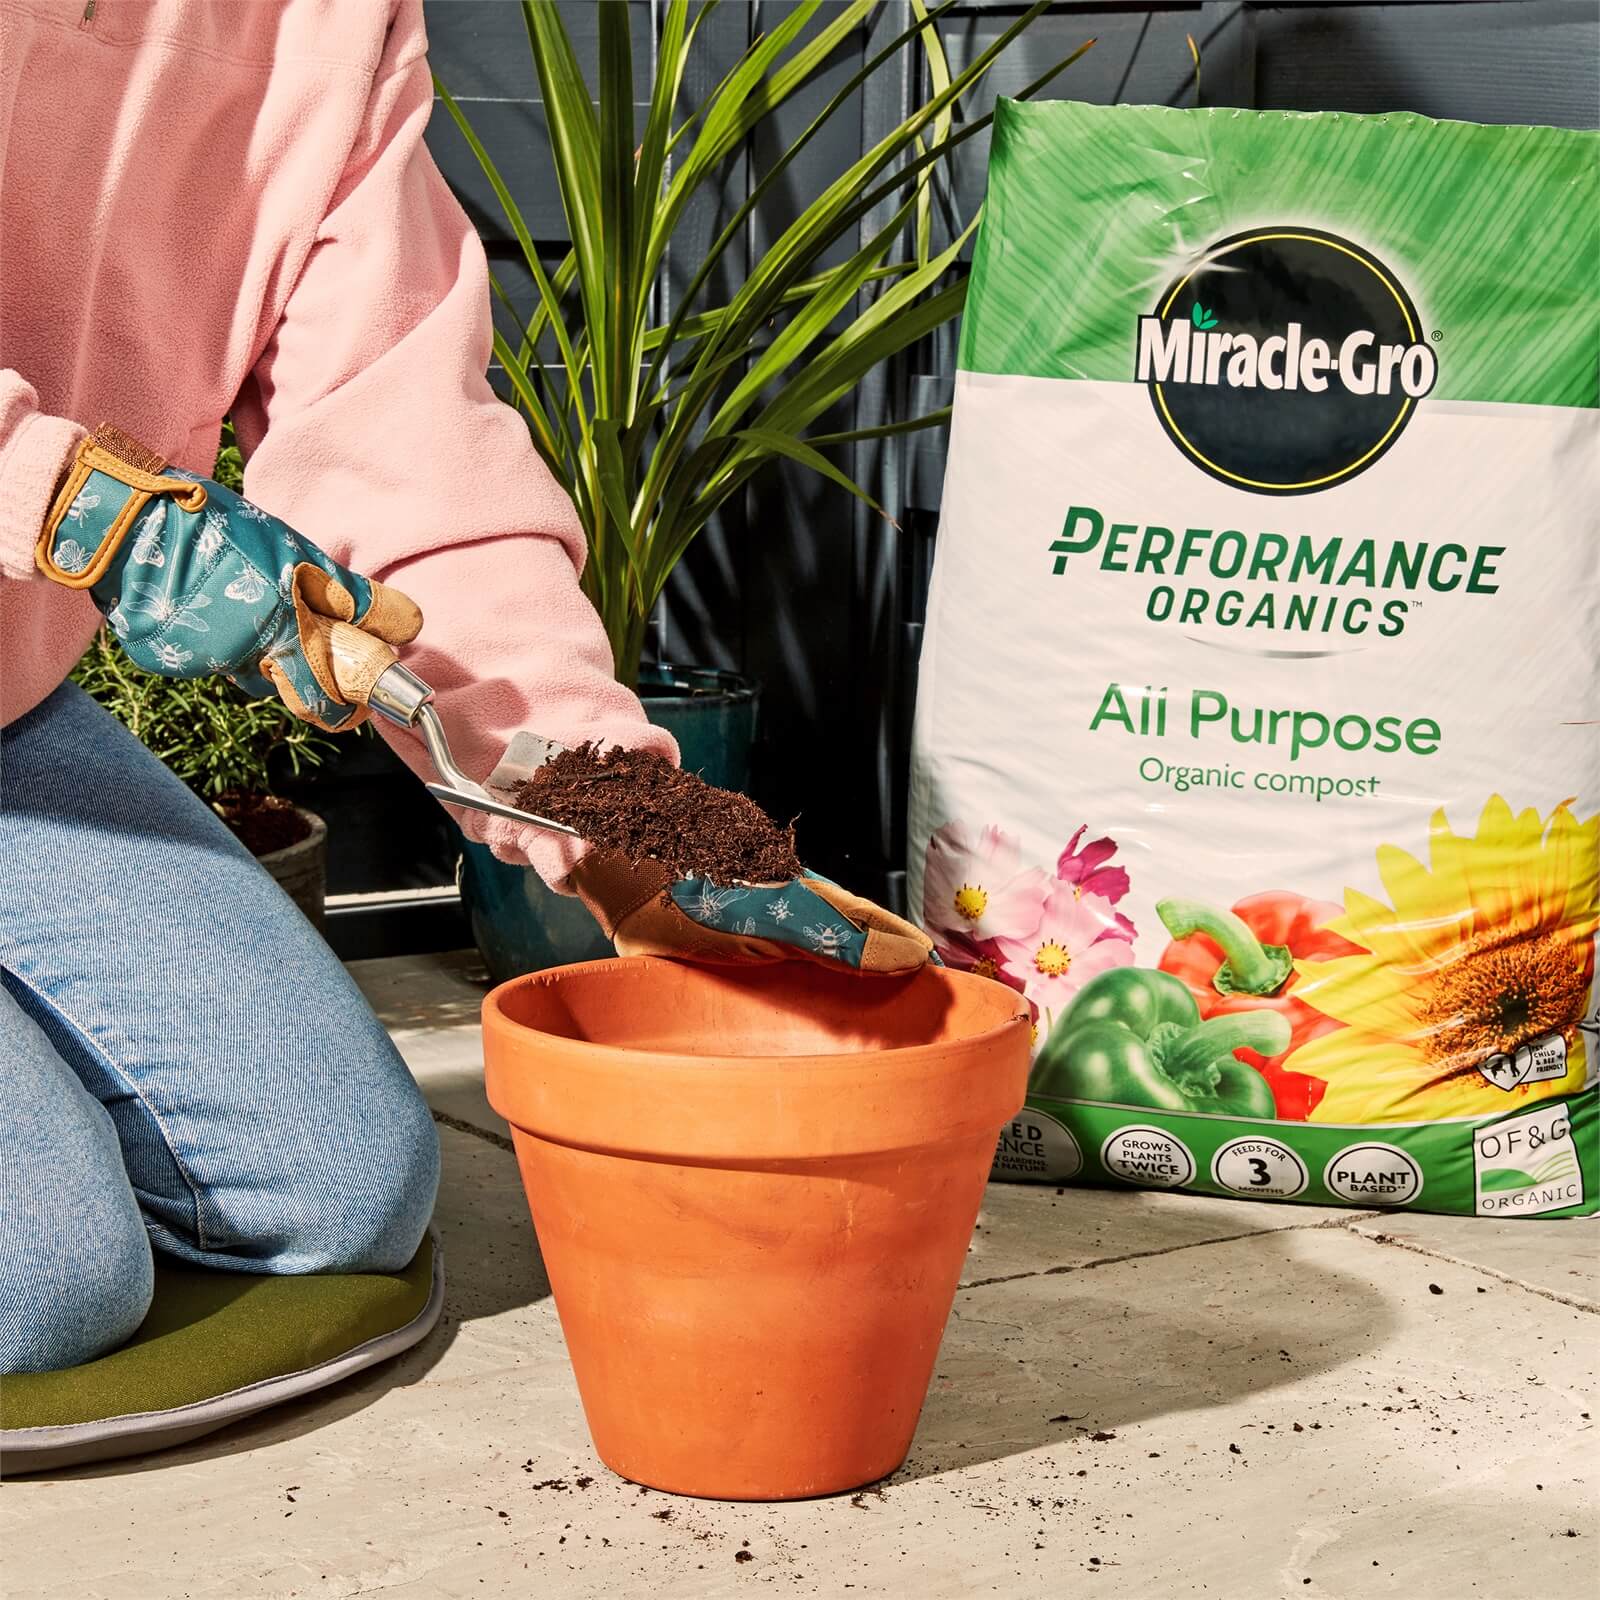 Miracle-Gro Performance Organics All Purpose Organic Compost - 40L